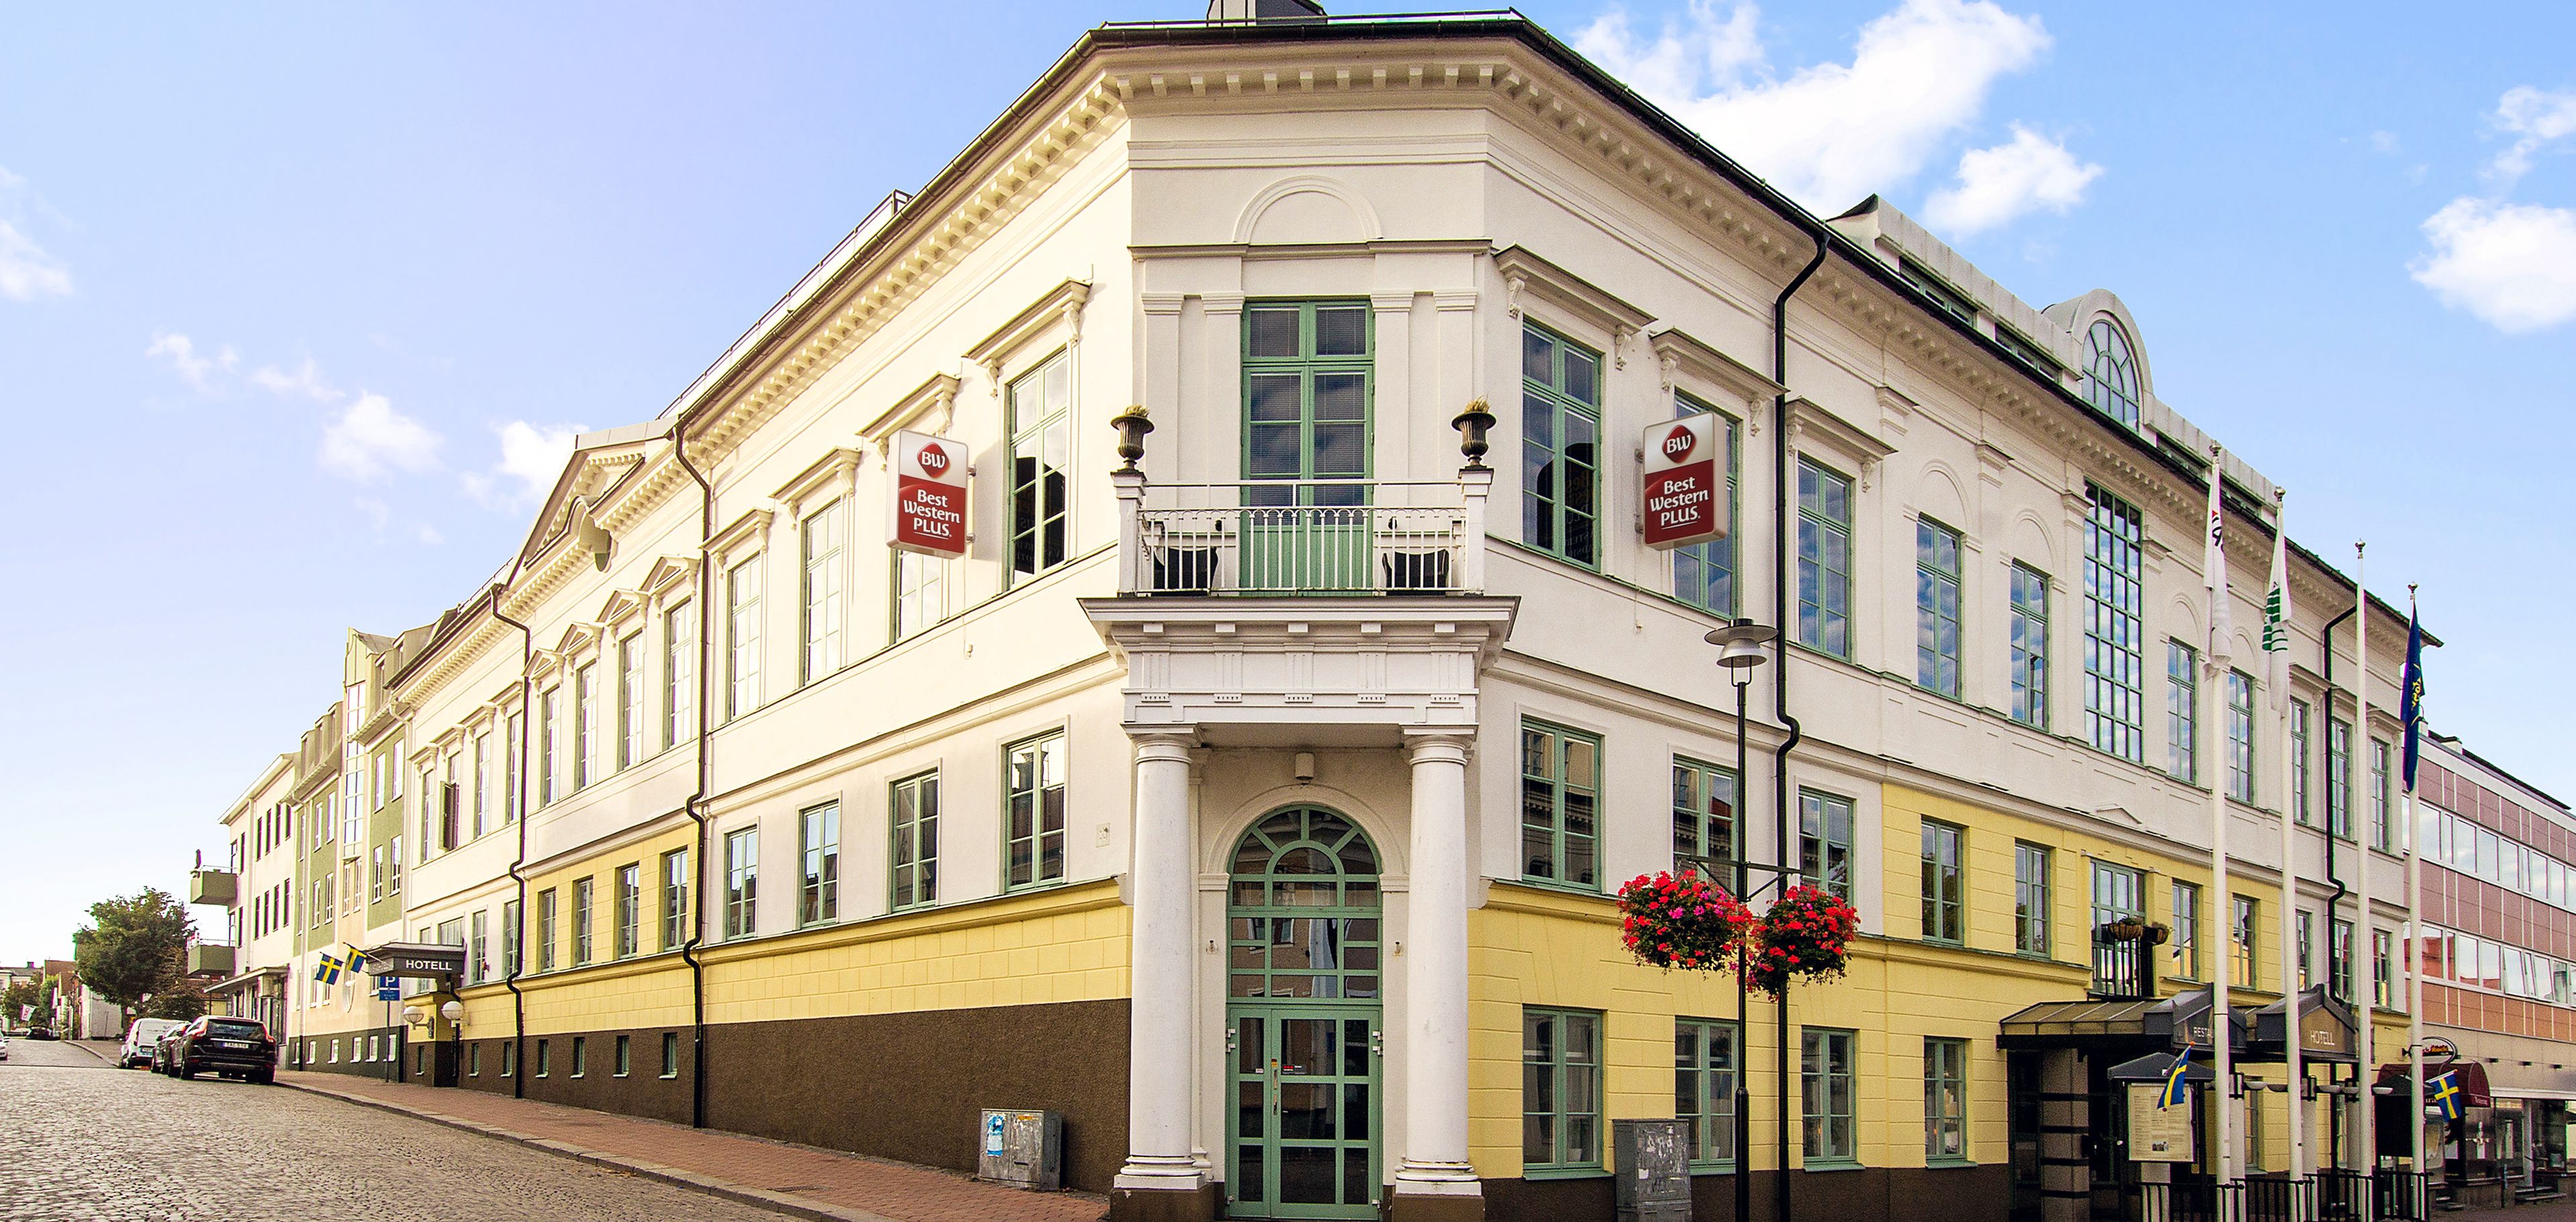 Västerviks Stadshotell